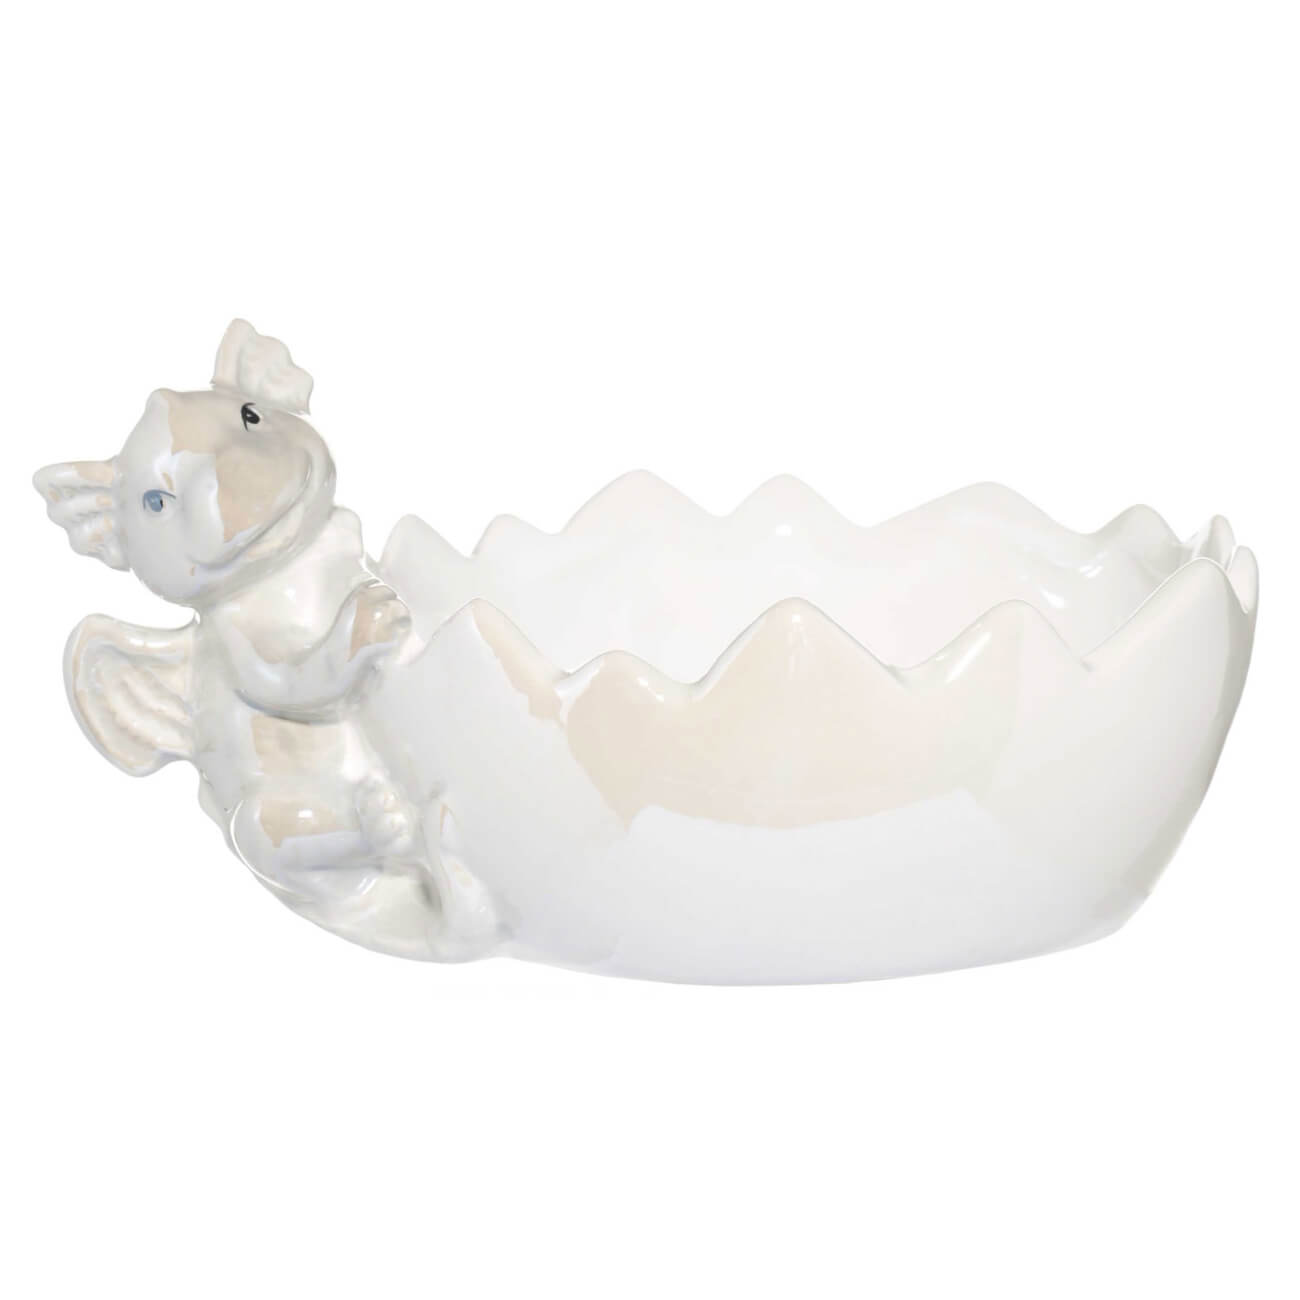 Салатник, 17х13х9 см, керамика, бело-серая, перламутр, Дракон с яйцом, Dragon cute